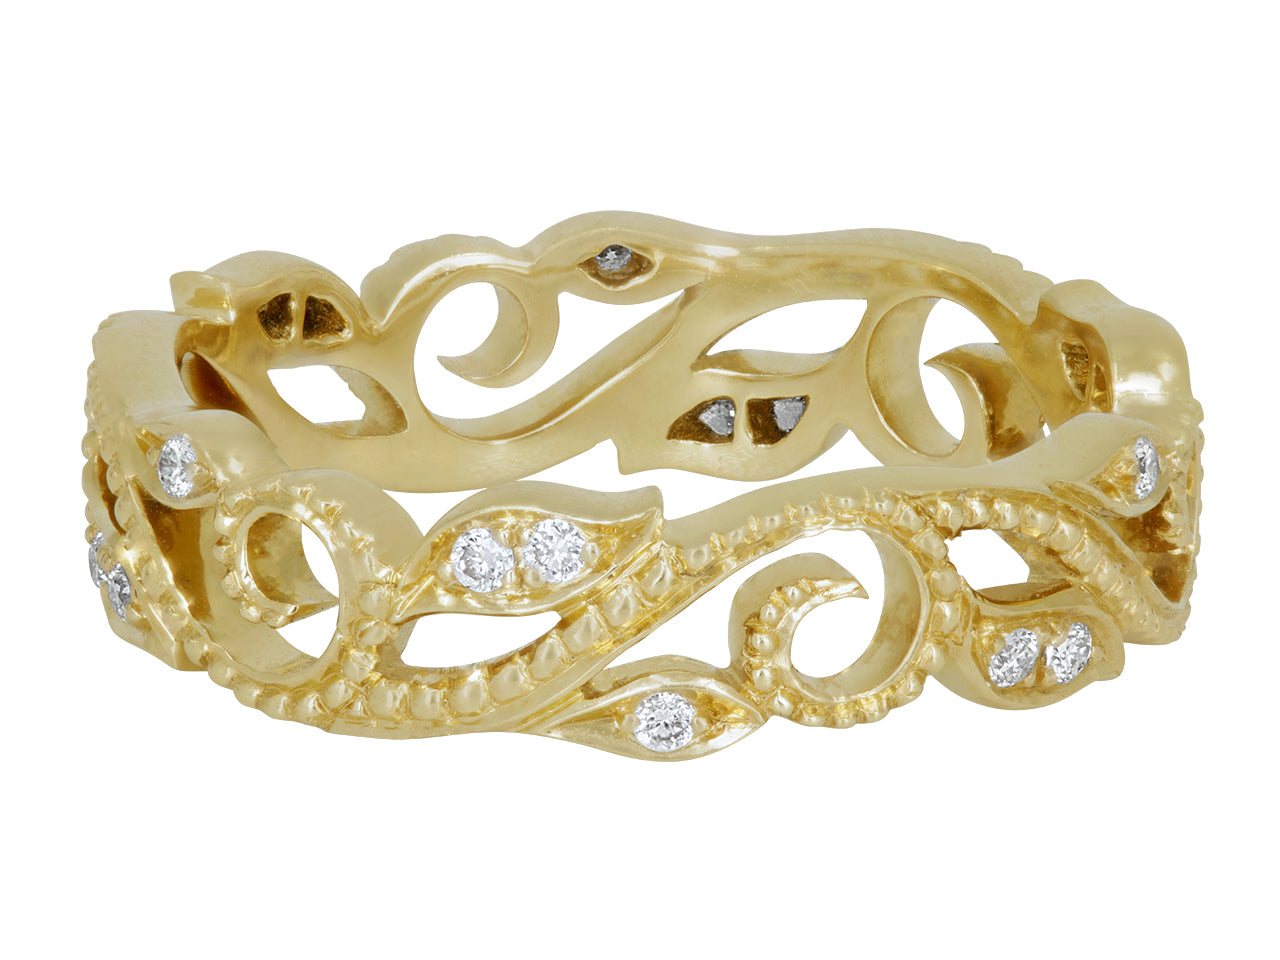 Rhonda Faber Green 'Vine' Diamond Ring in 18K Gold